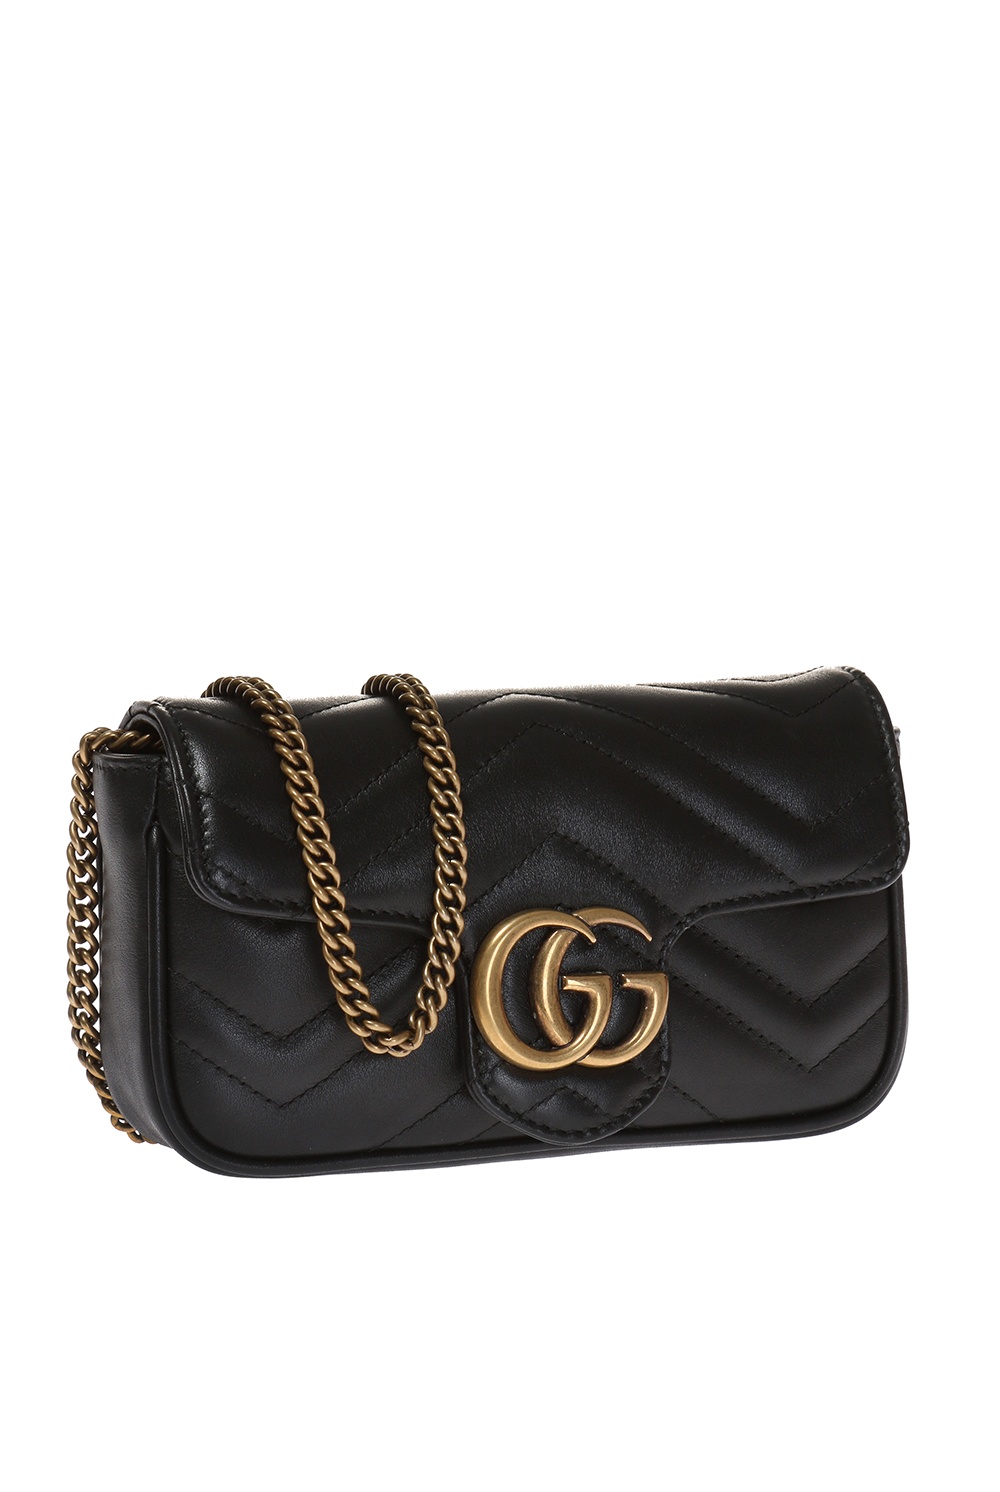 GG Marmont' shoulder bag Gucci - Vitkac Norway